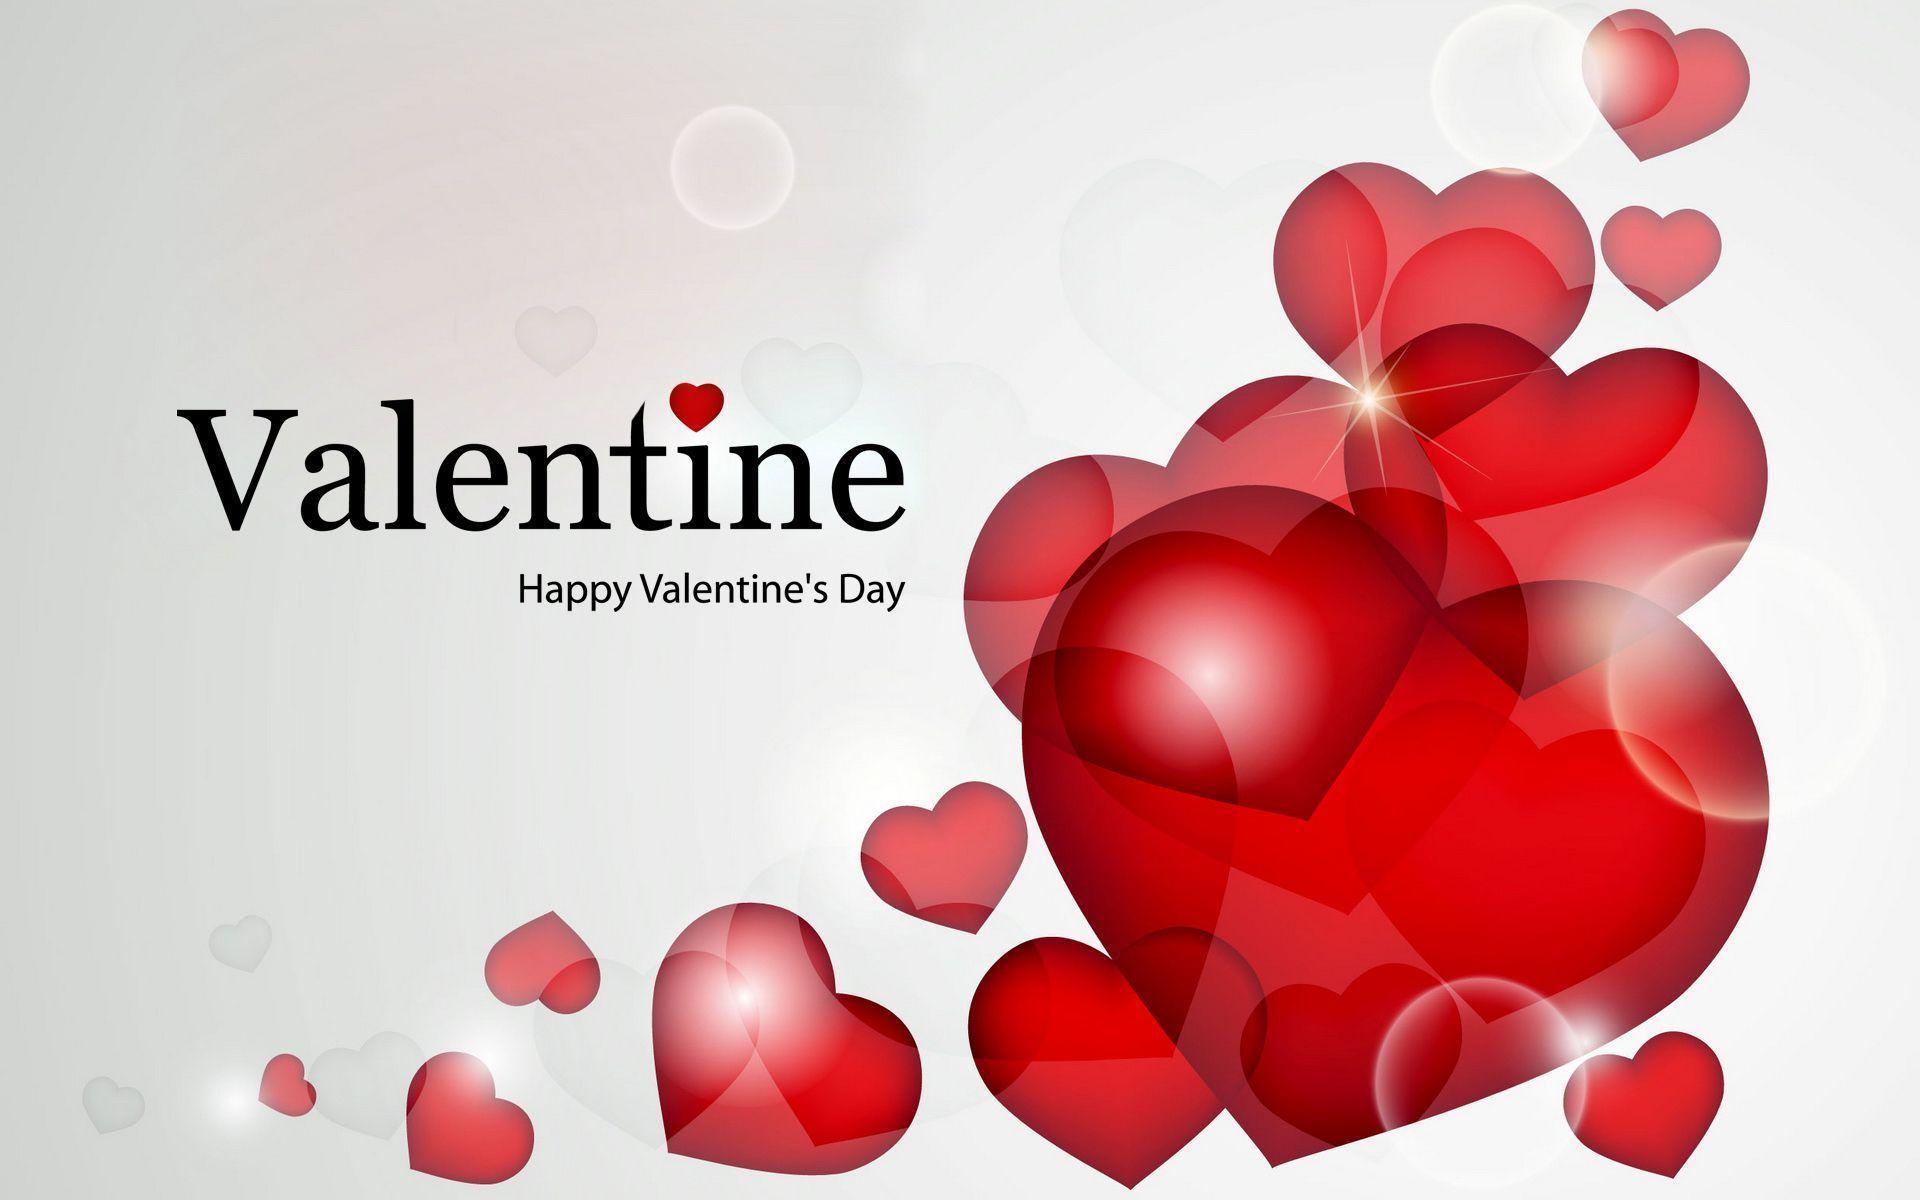 Happy Valentines Day Image Wallpaper. Happy Valentines Day Image